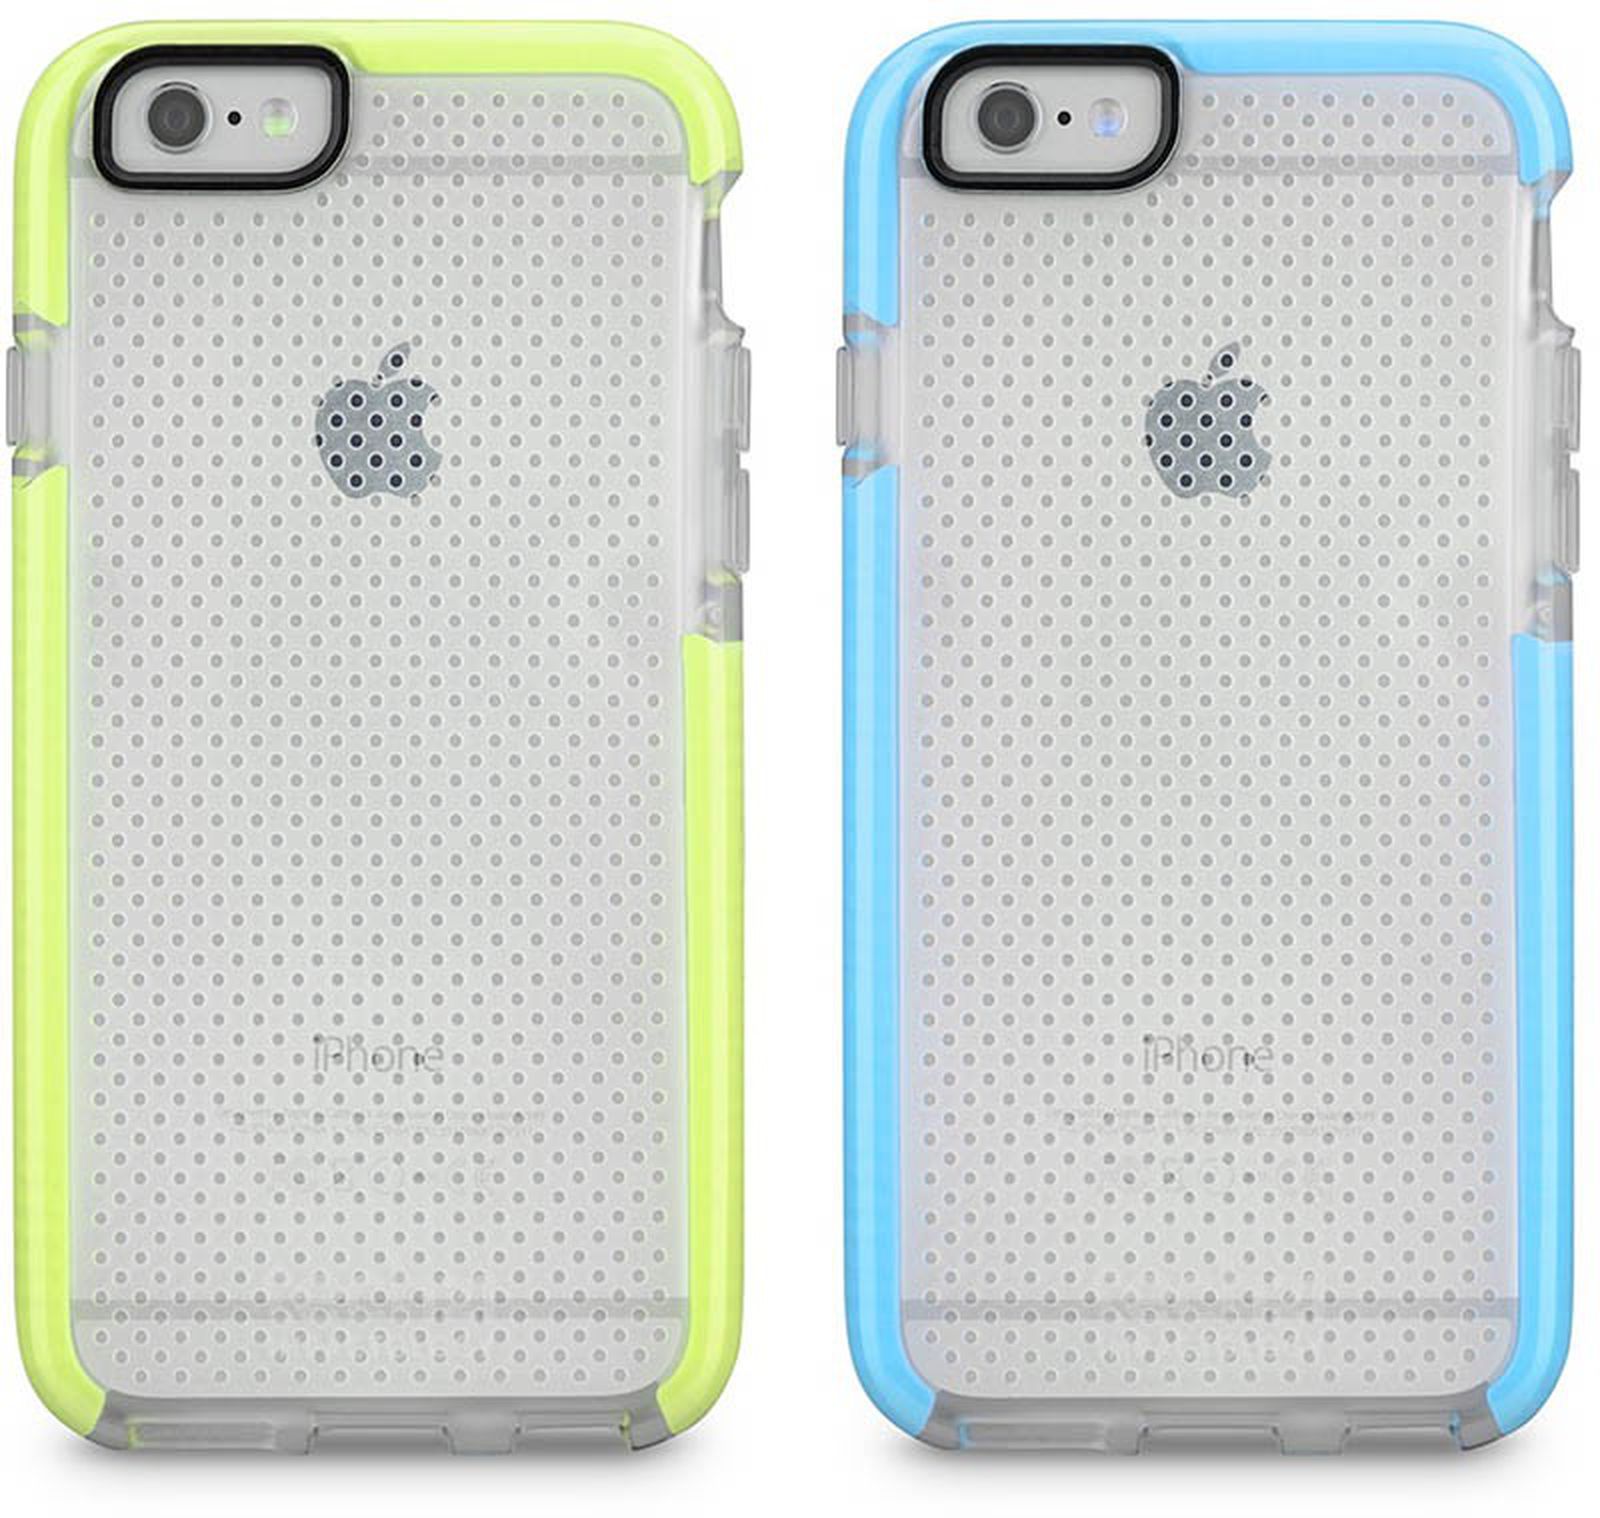 Tech21's Apple-Exclusive iPhone Cases Designed to Watch Sport - MacRumors